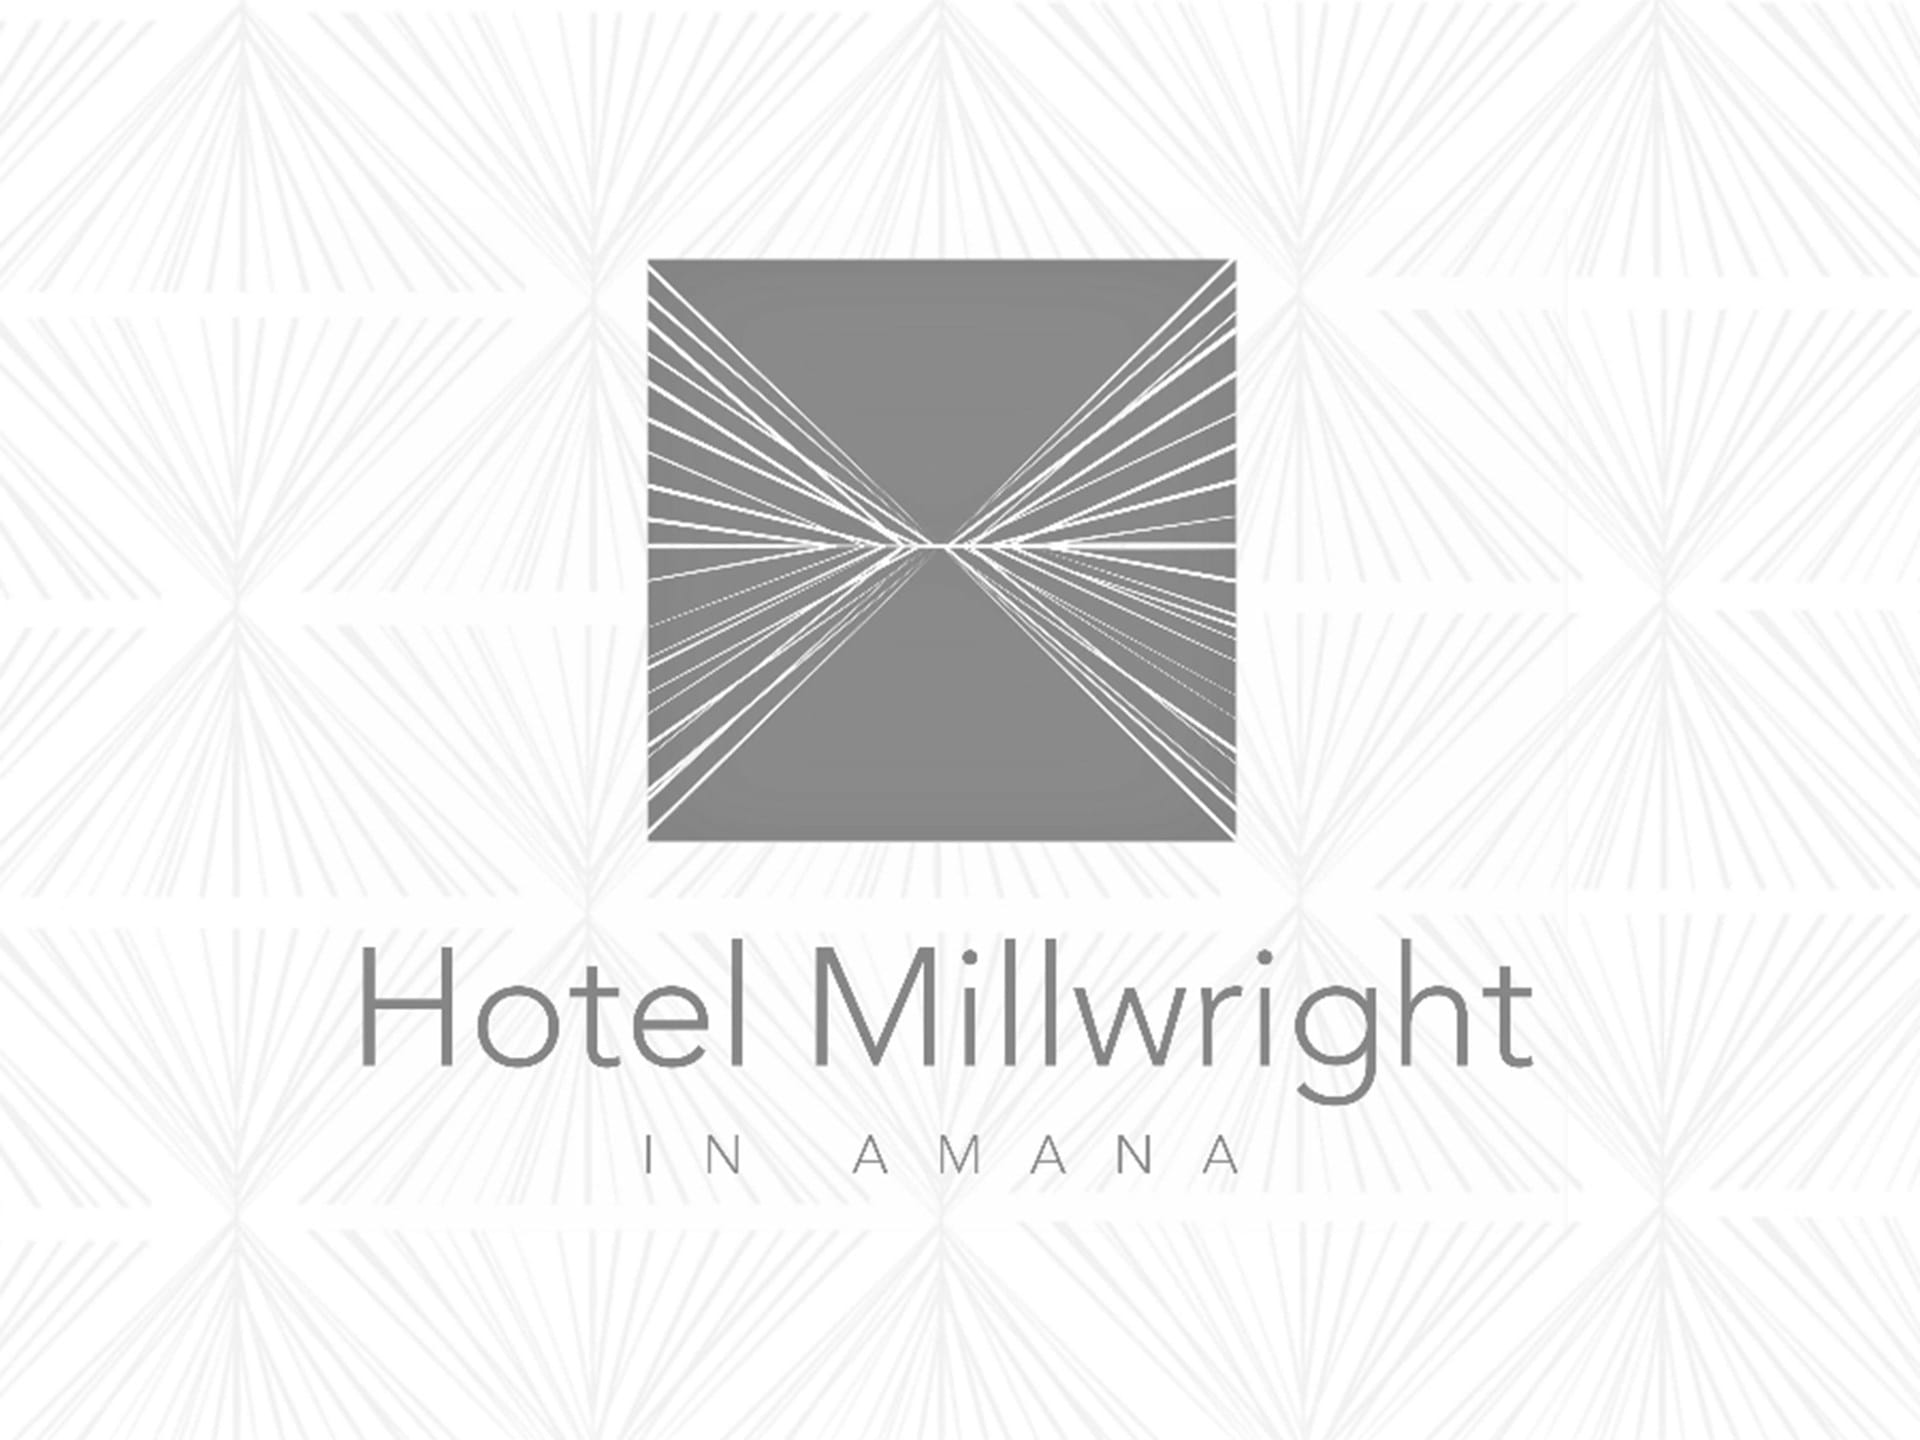 Hotel Millwright 